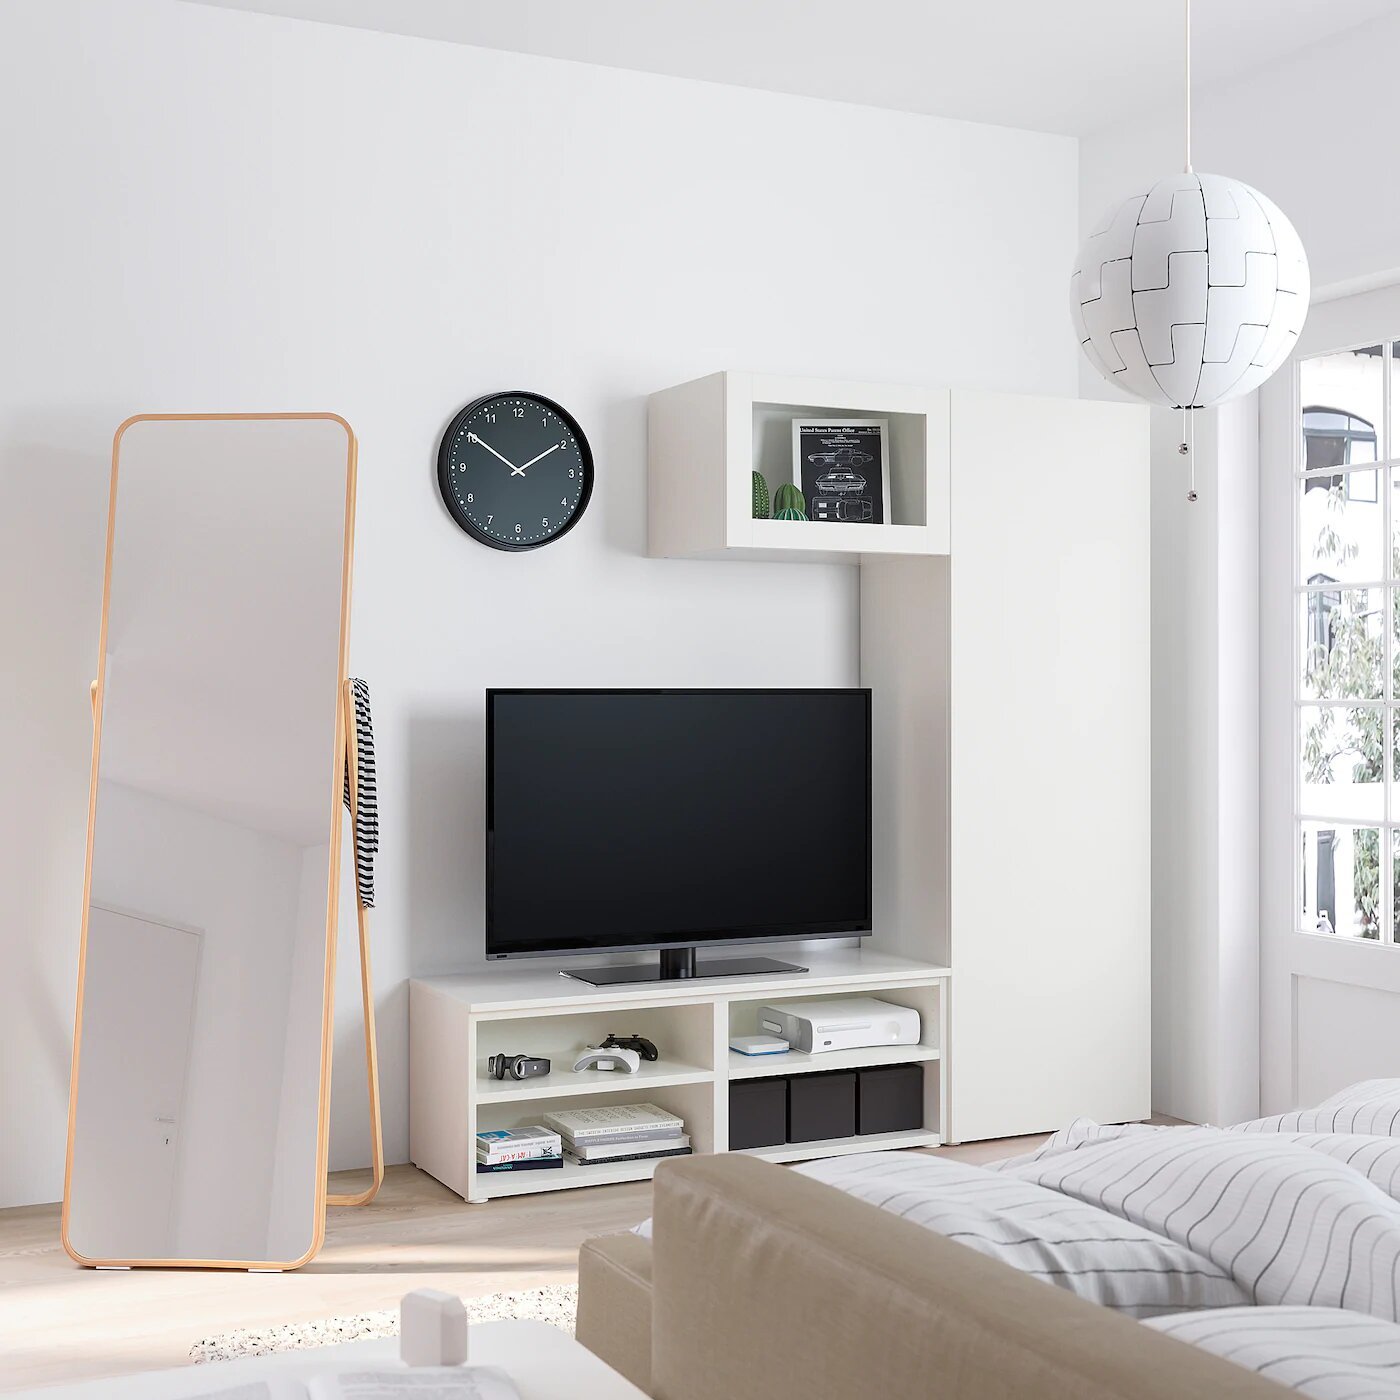 Mueble para la televisión Platsa de Ikea pisos pequeños. Pantalla plana